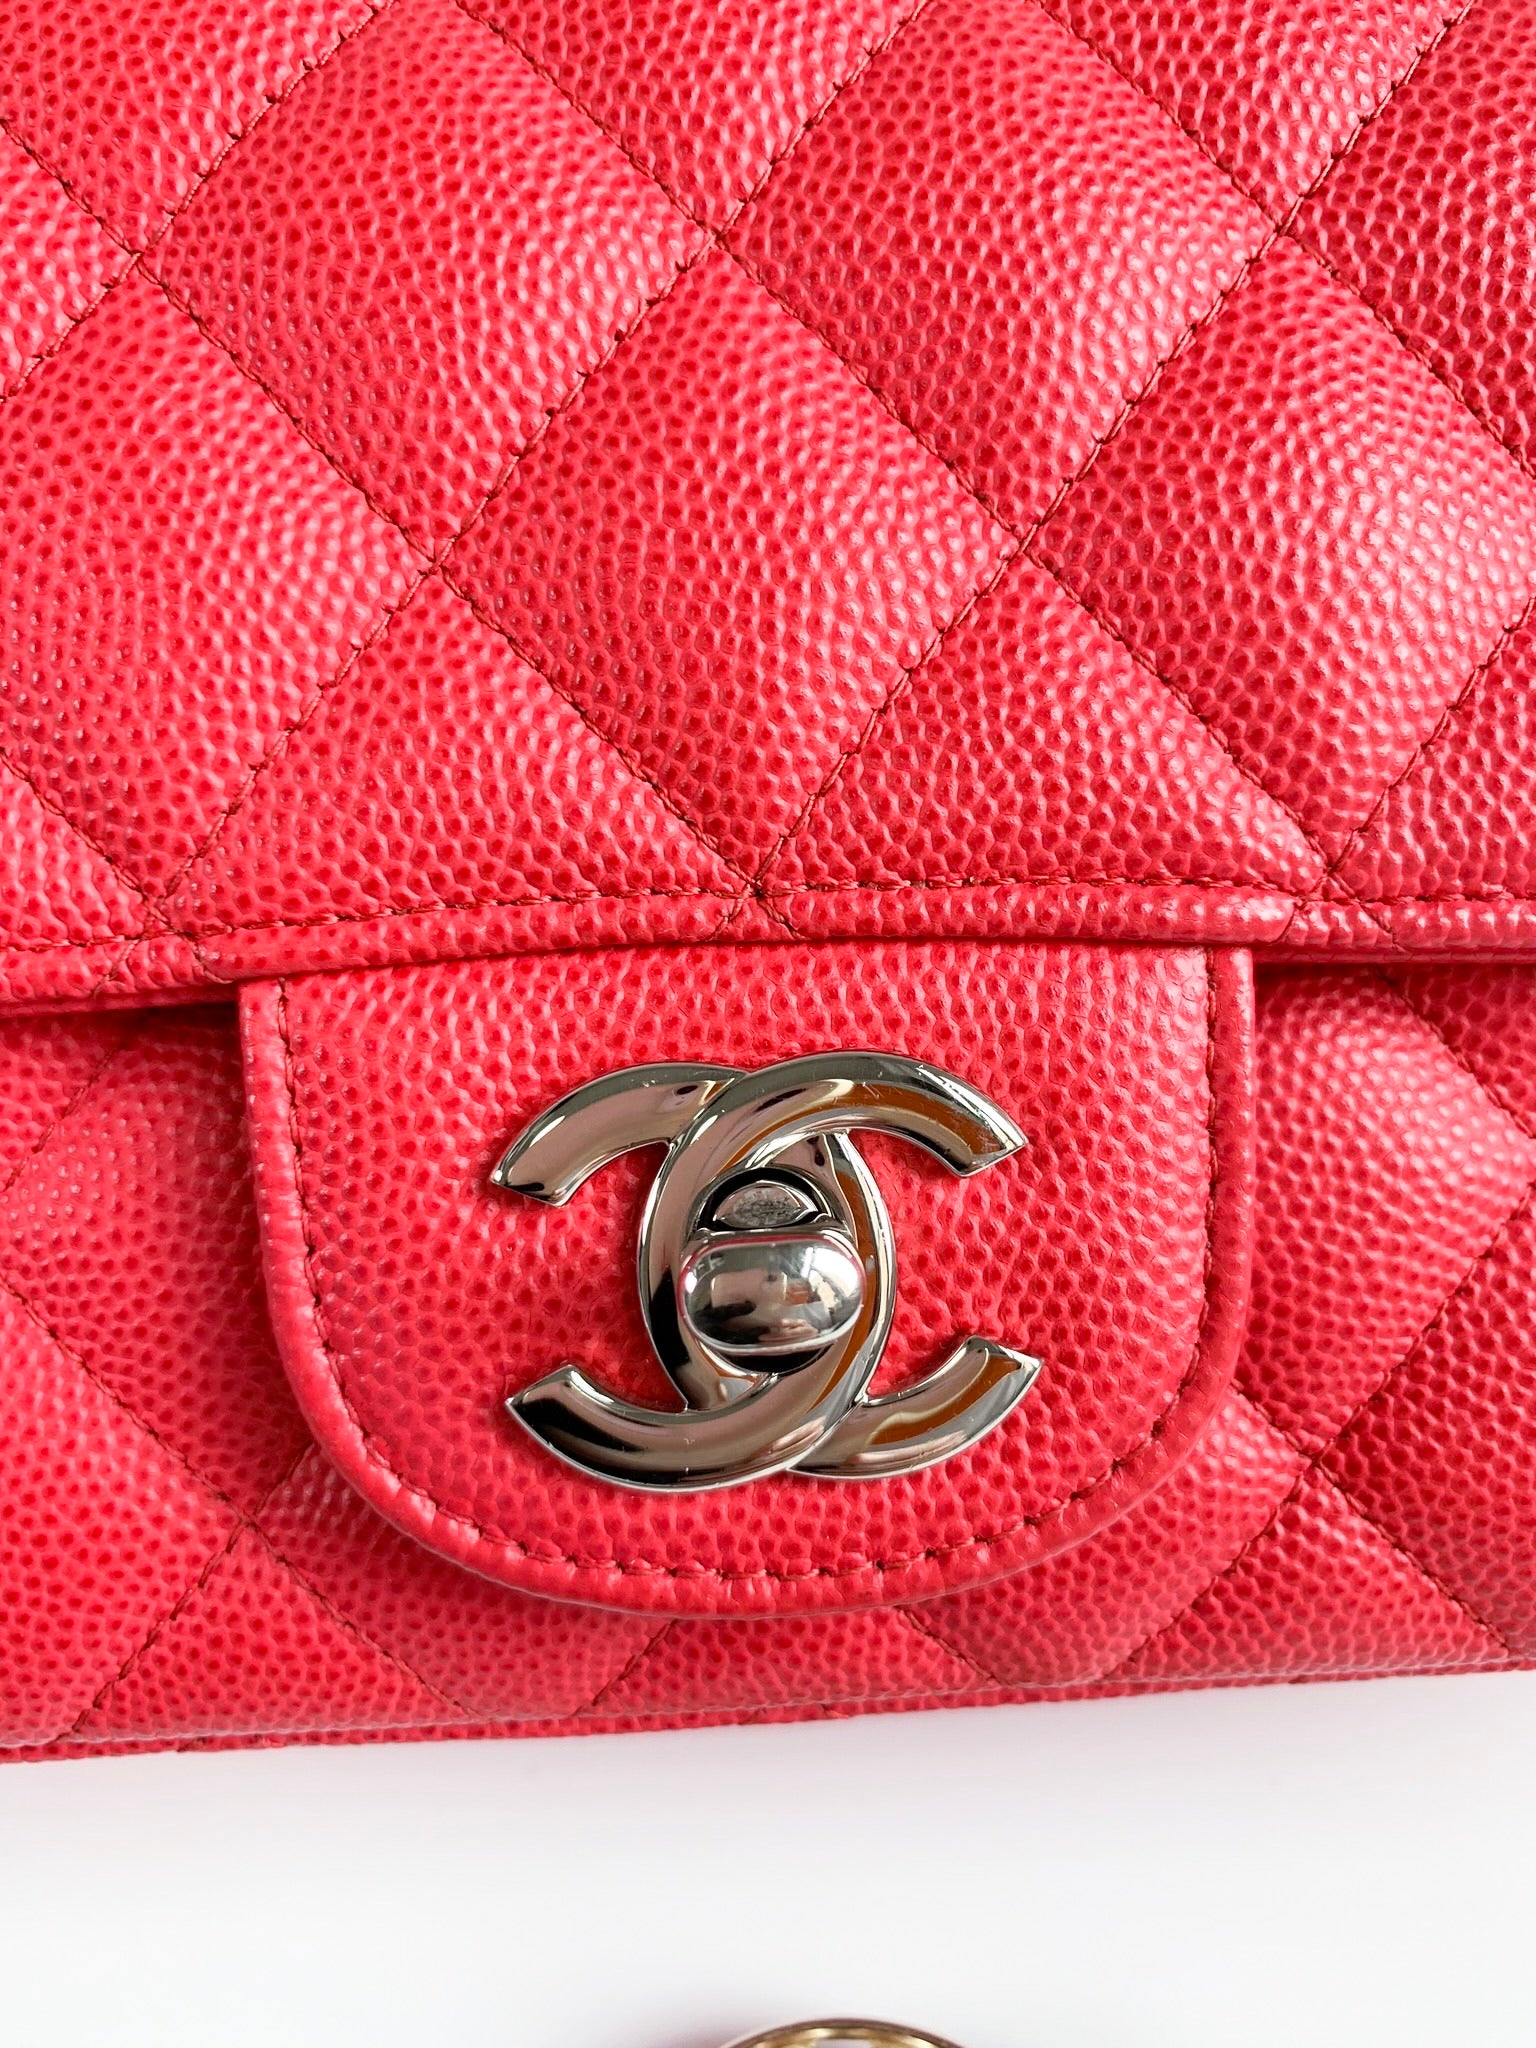 CHANEL CHANEL Caviar Mini Bags & Handbags for Women, Authenticity  Guaranteed